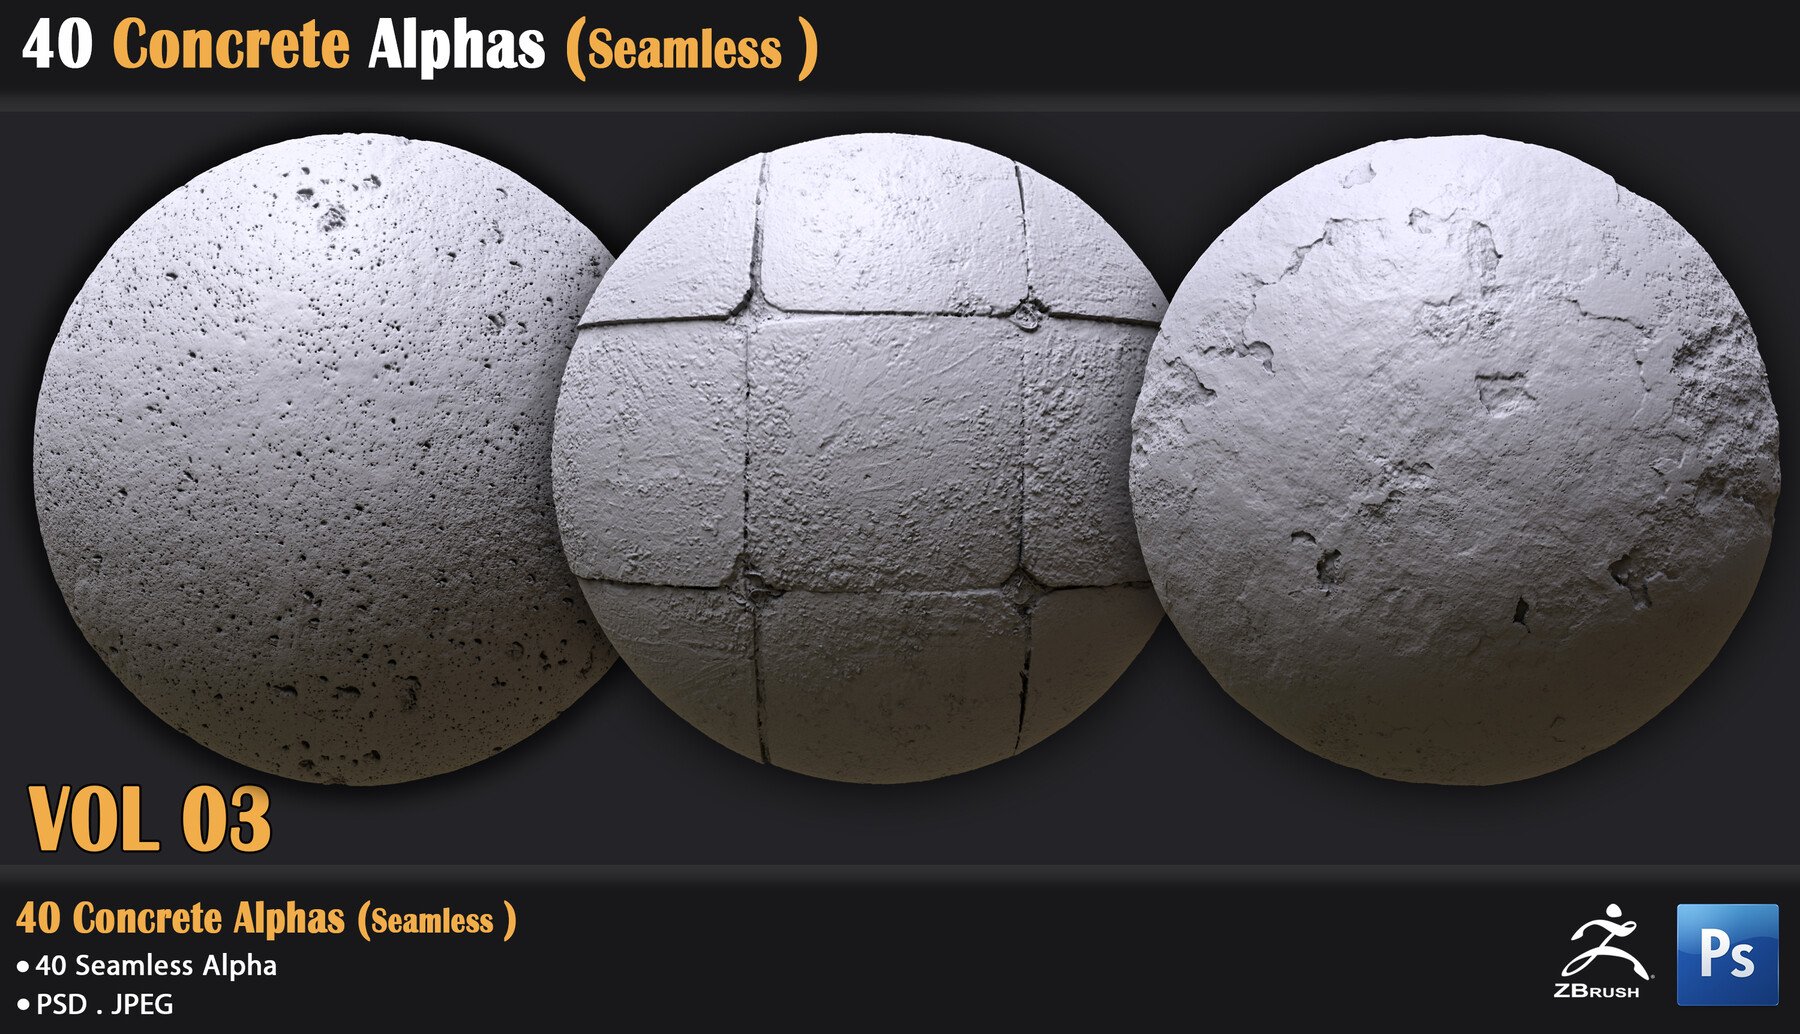 ArtStation - 40 Concrete Alphas (Seamless ) voL-03 | Brushes